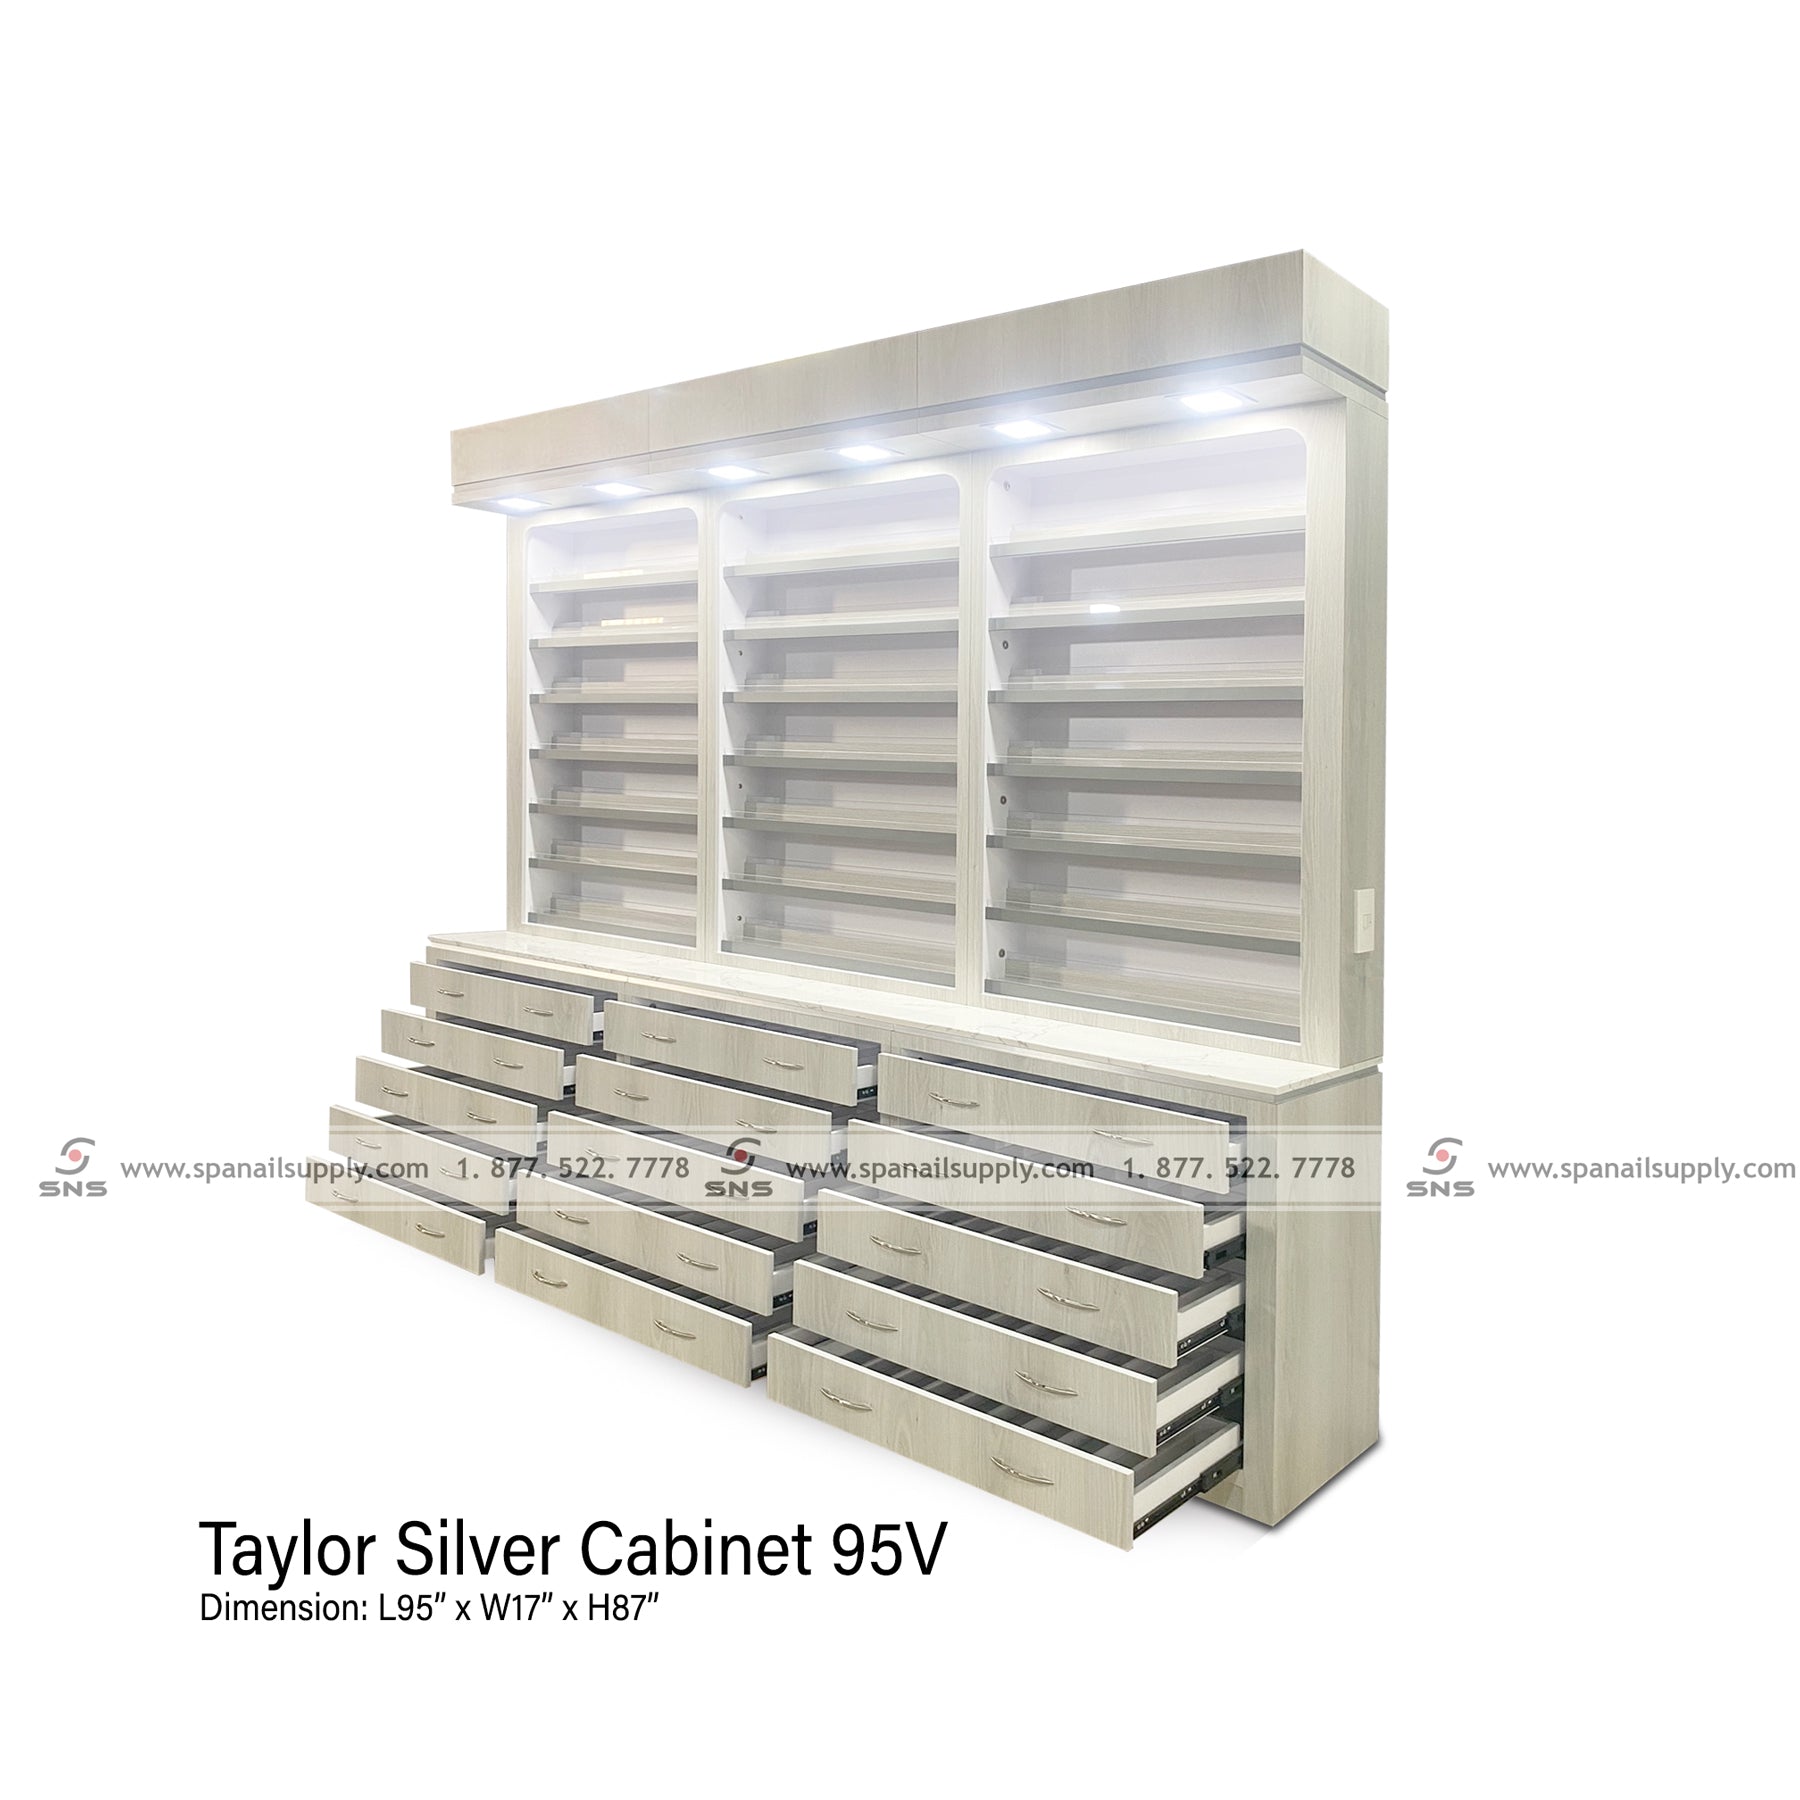 Taylor Silver Cabinet 95V